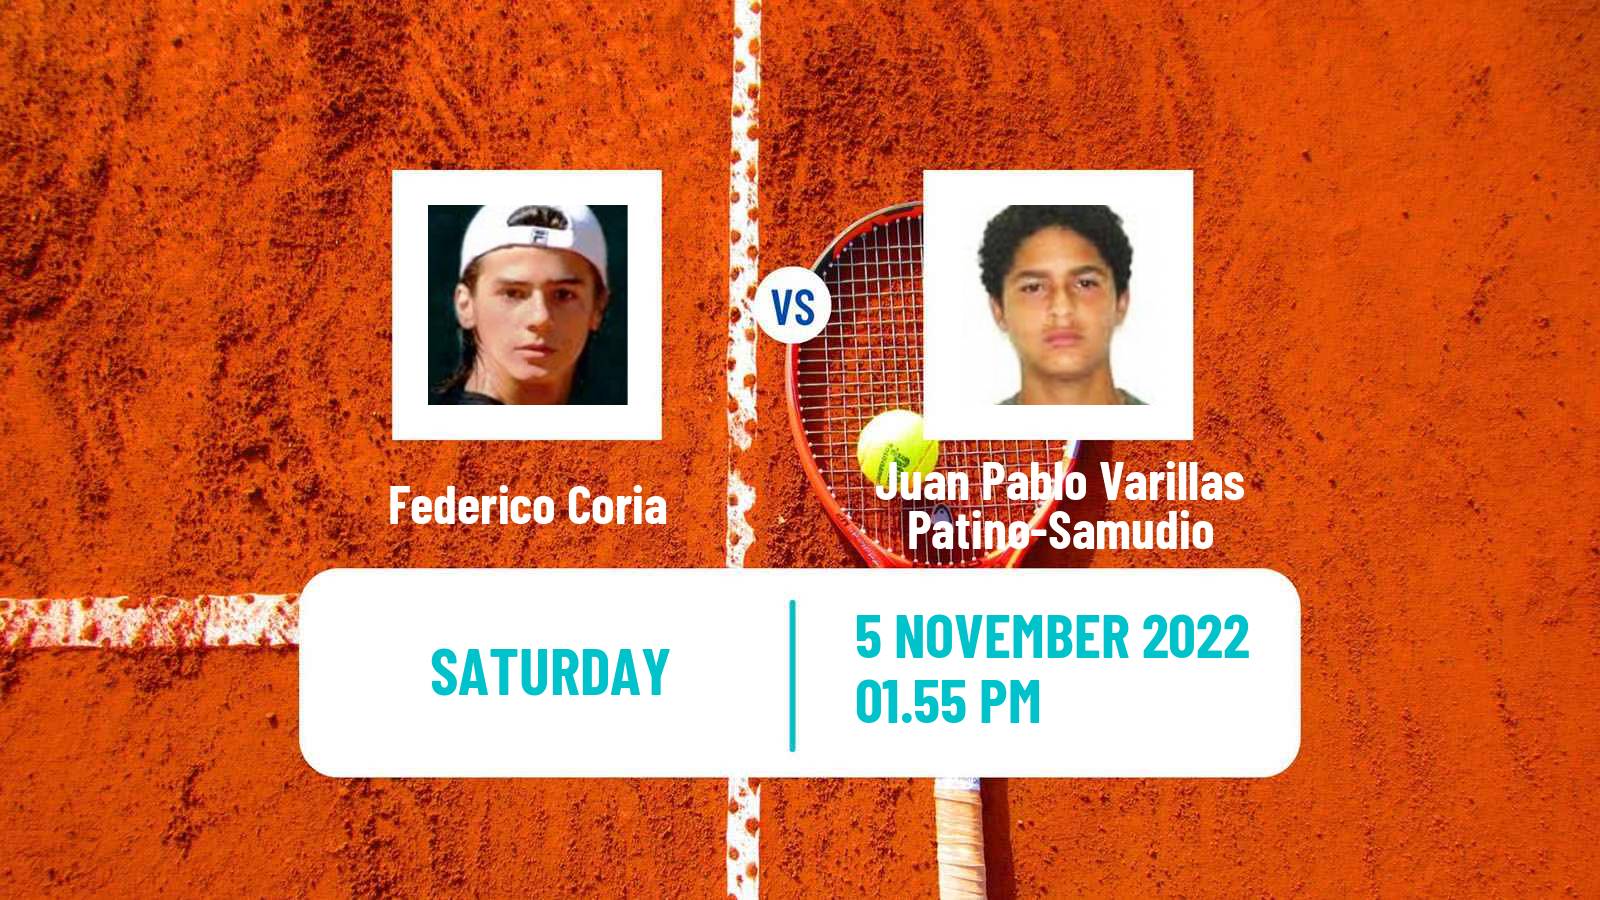 Tennis ATP Challenger Federico Coria - Juan Pablo Varillas Patino-Samudio